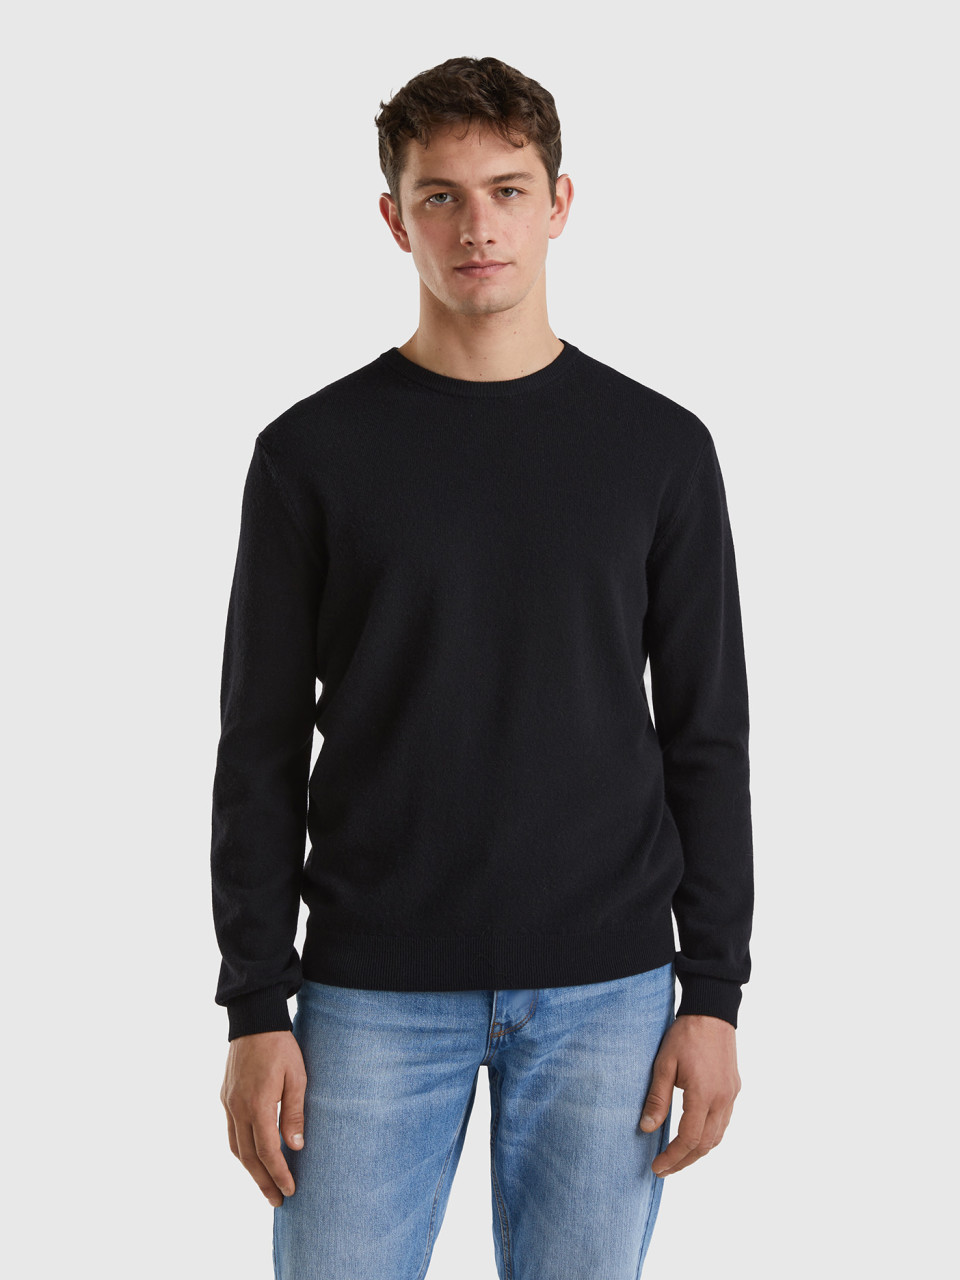 Benetton, Black Crew Neck Sweater In Pure Merino Wool, Black, Men